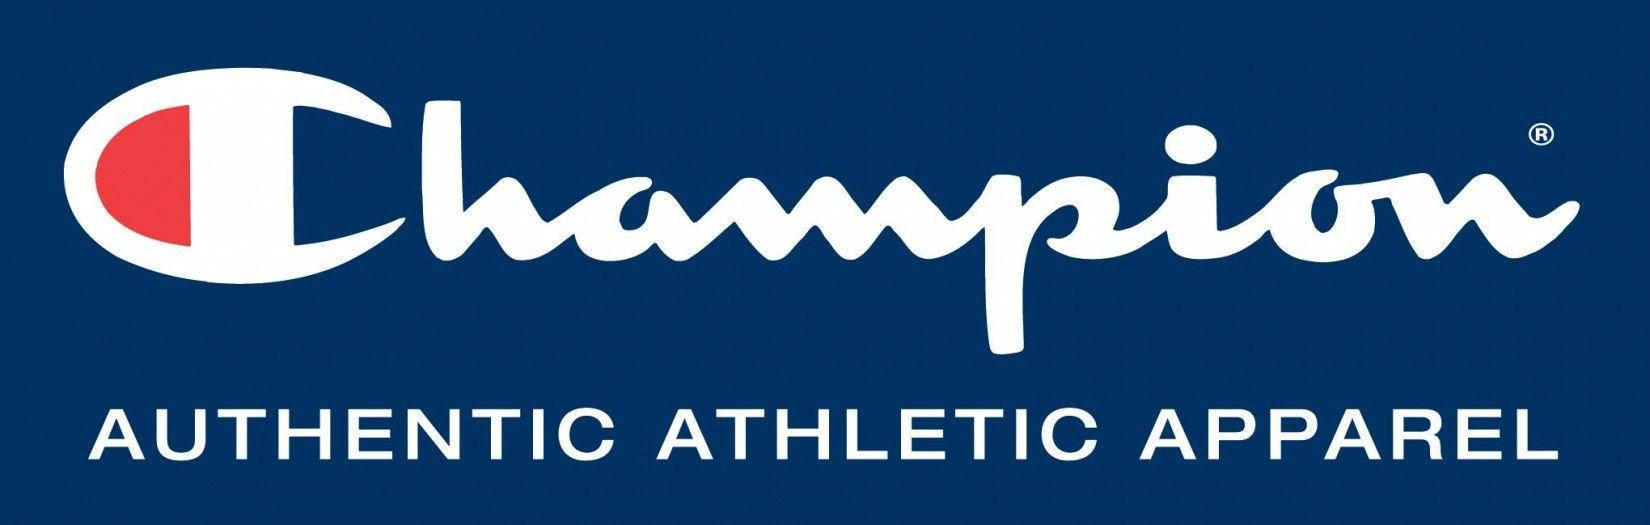 The Champion Logo Brand Background